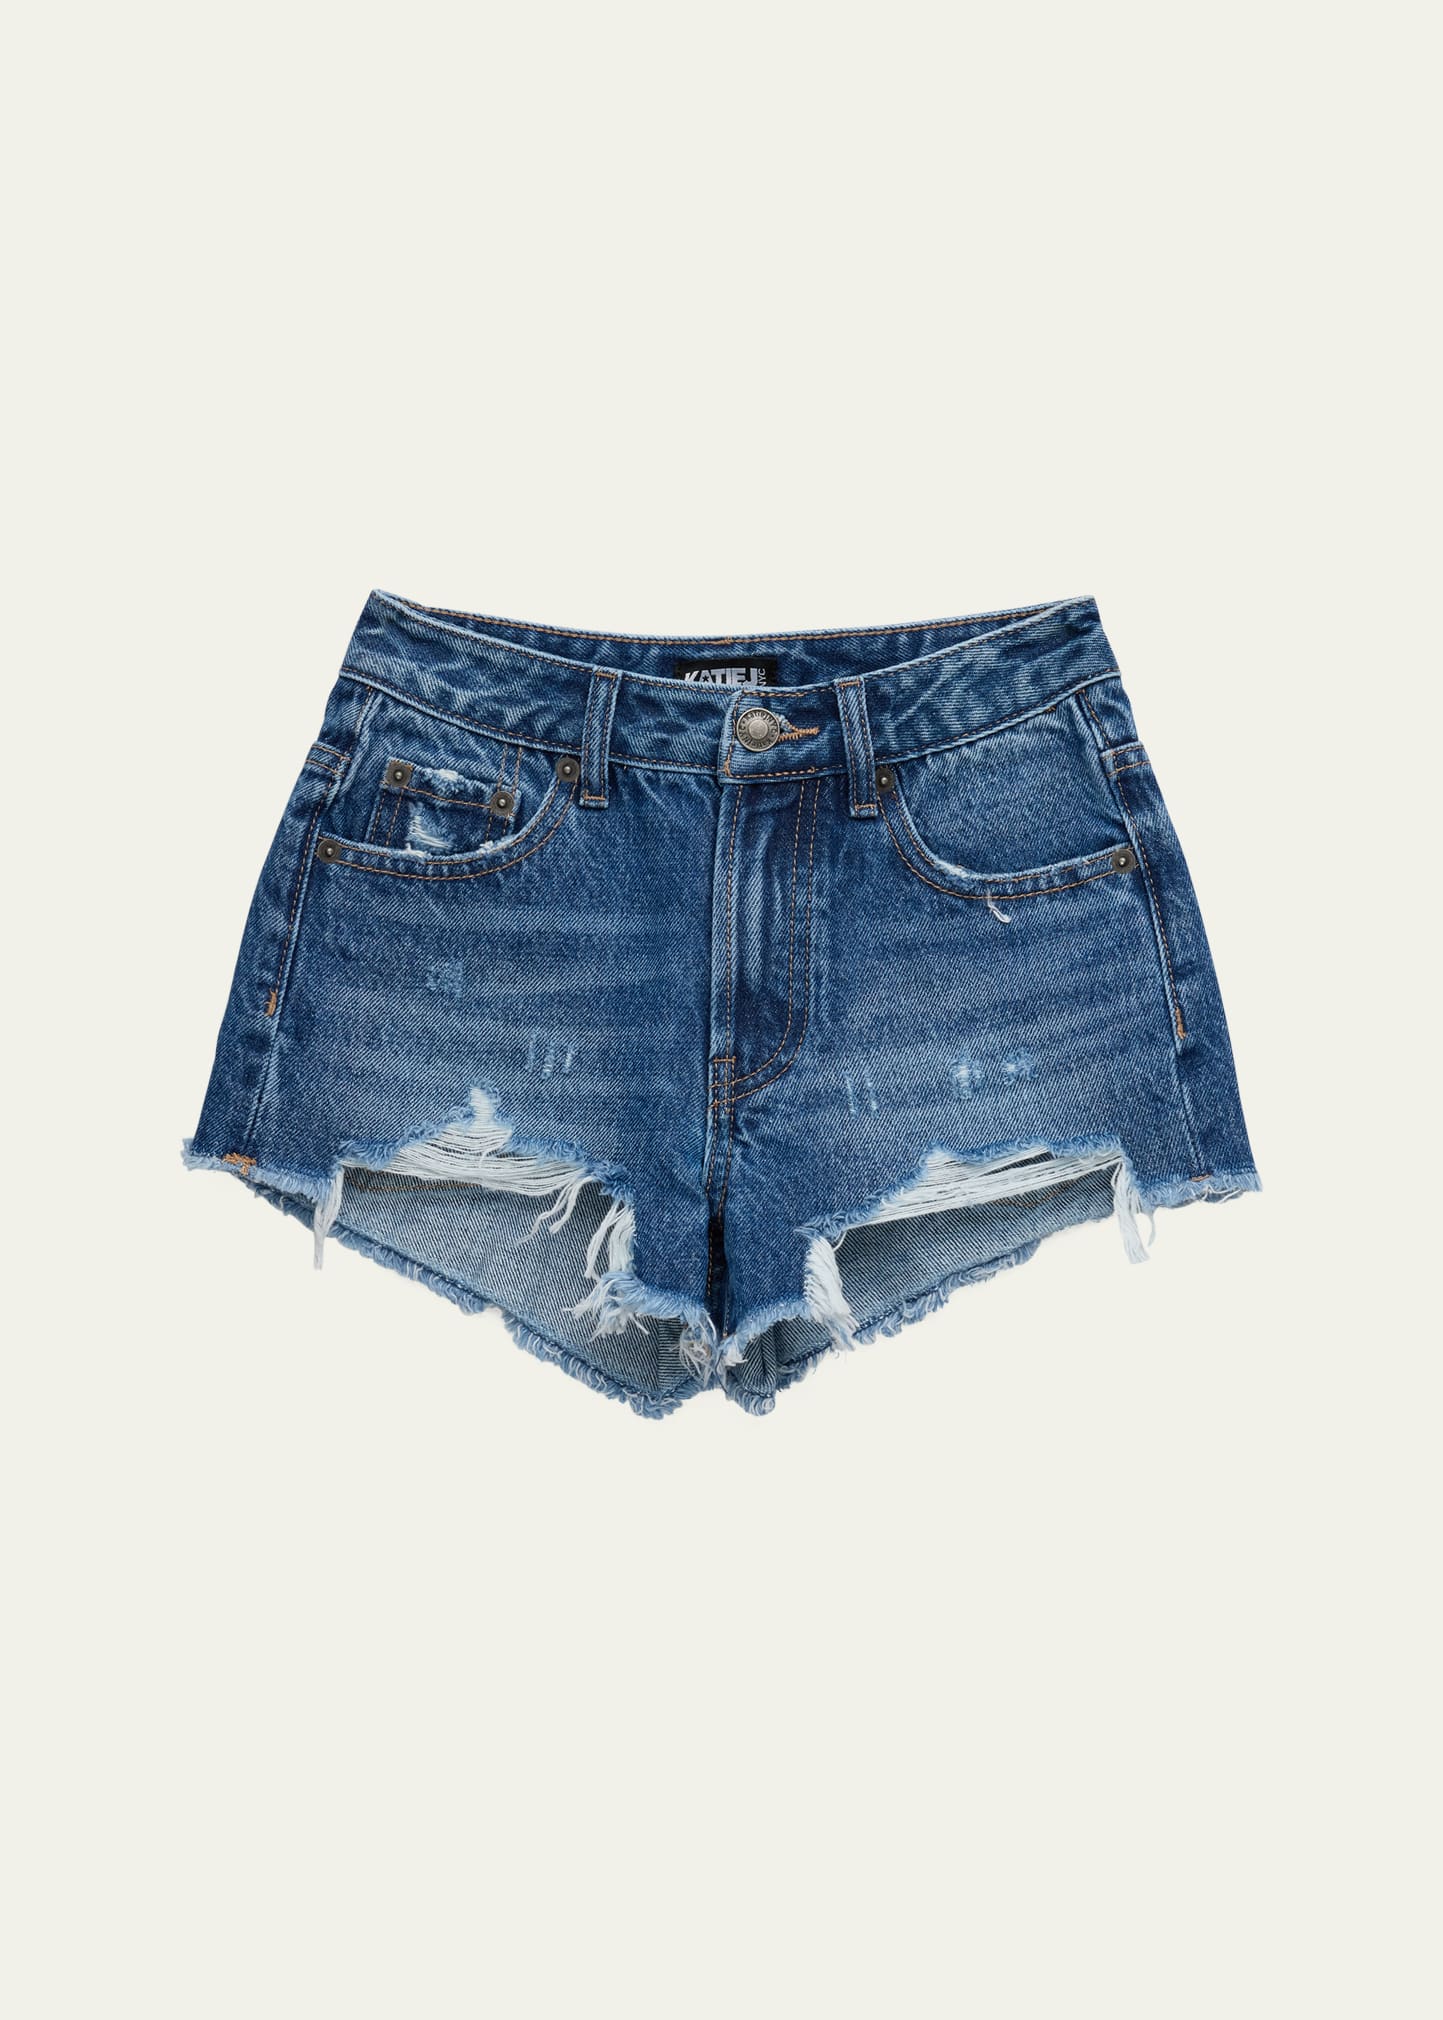 Girl's Tween Malibu Distressed Shorts, Size S-XL